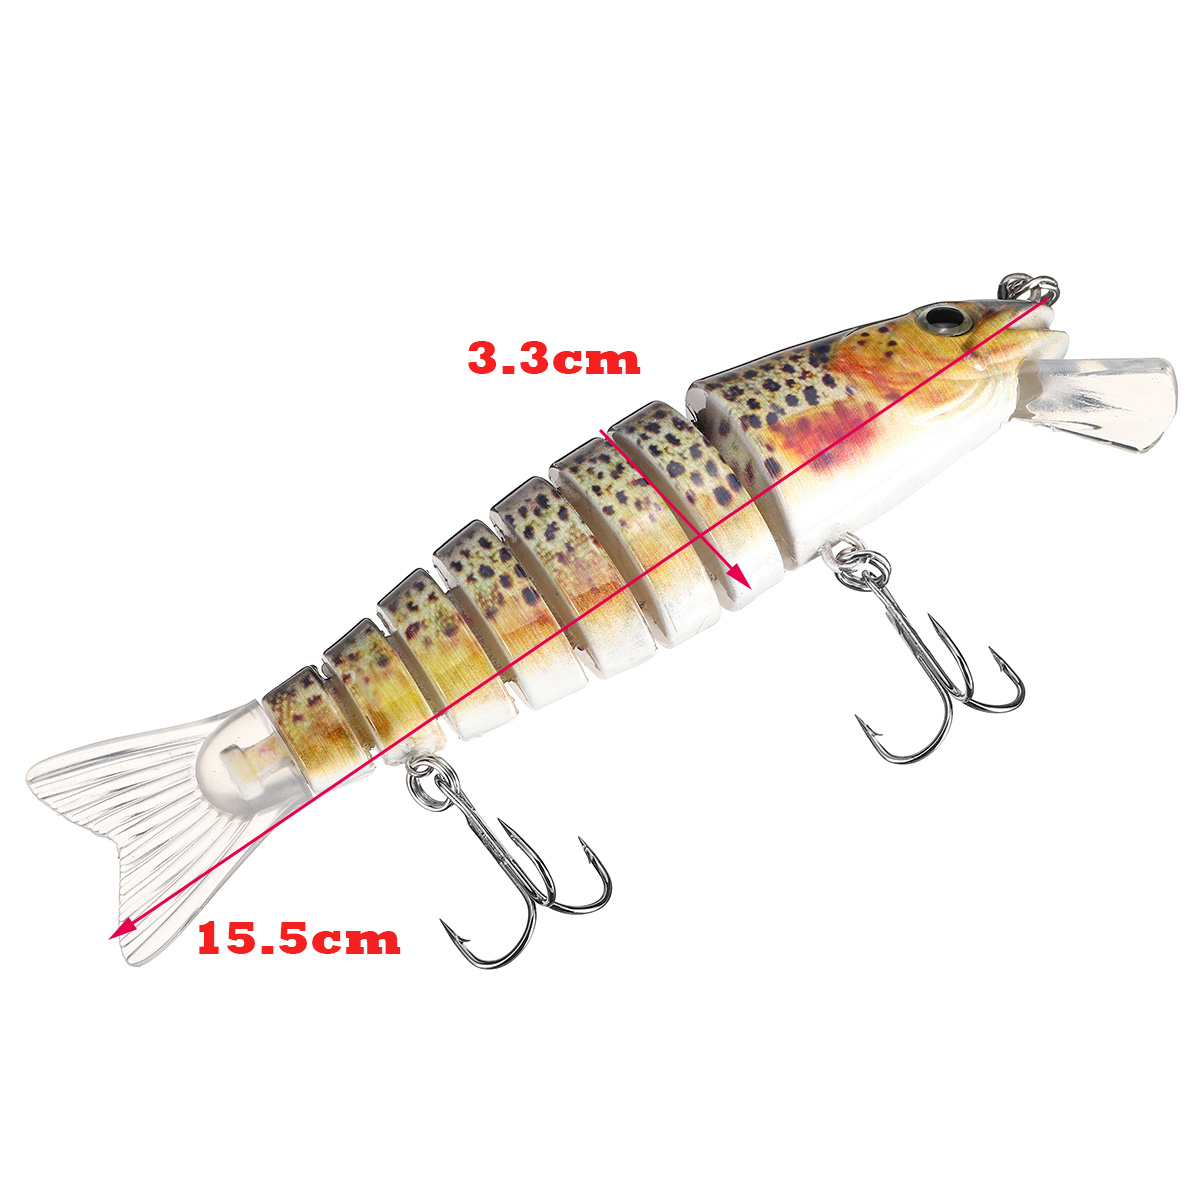 ZANLURE-155cm-Fishing-Lure-8-Segement-Pike-Lure-With-Mouth-Swim-bait-Fishing-Bait-1598243-2